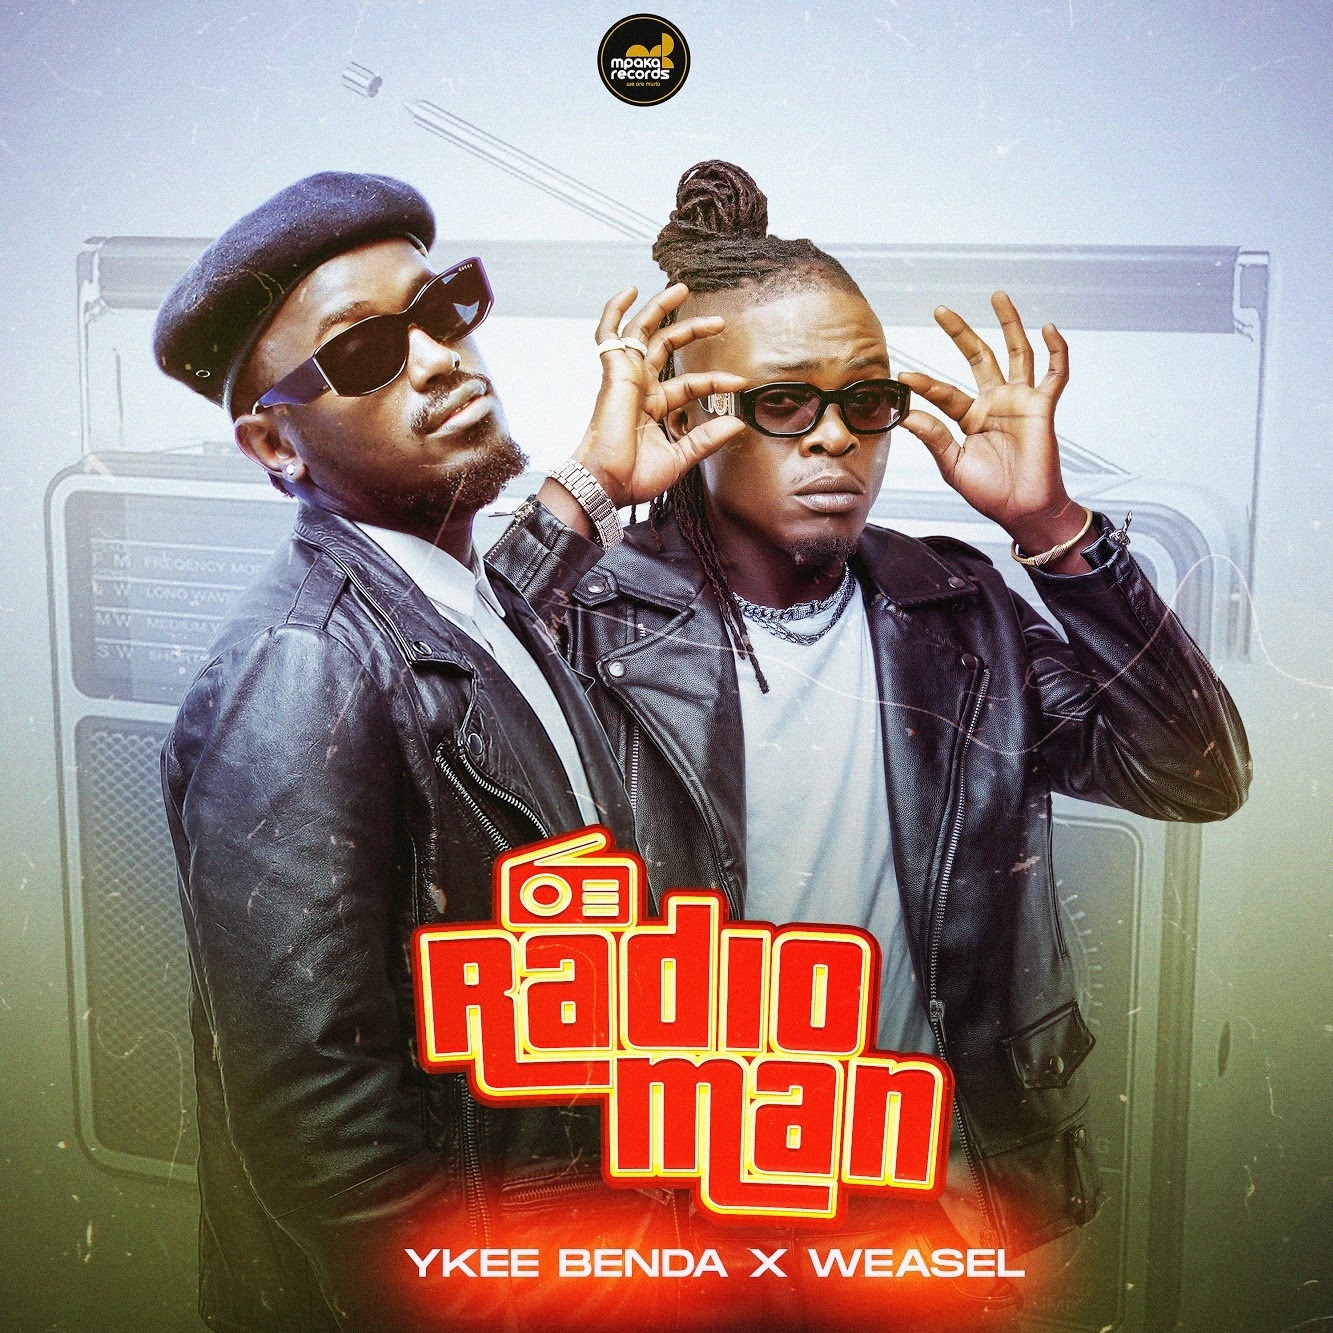 Ykee Benda teams up with Weasel for ‘Radio Man’ audiovisual 1 MUGIBSON